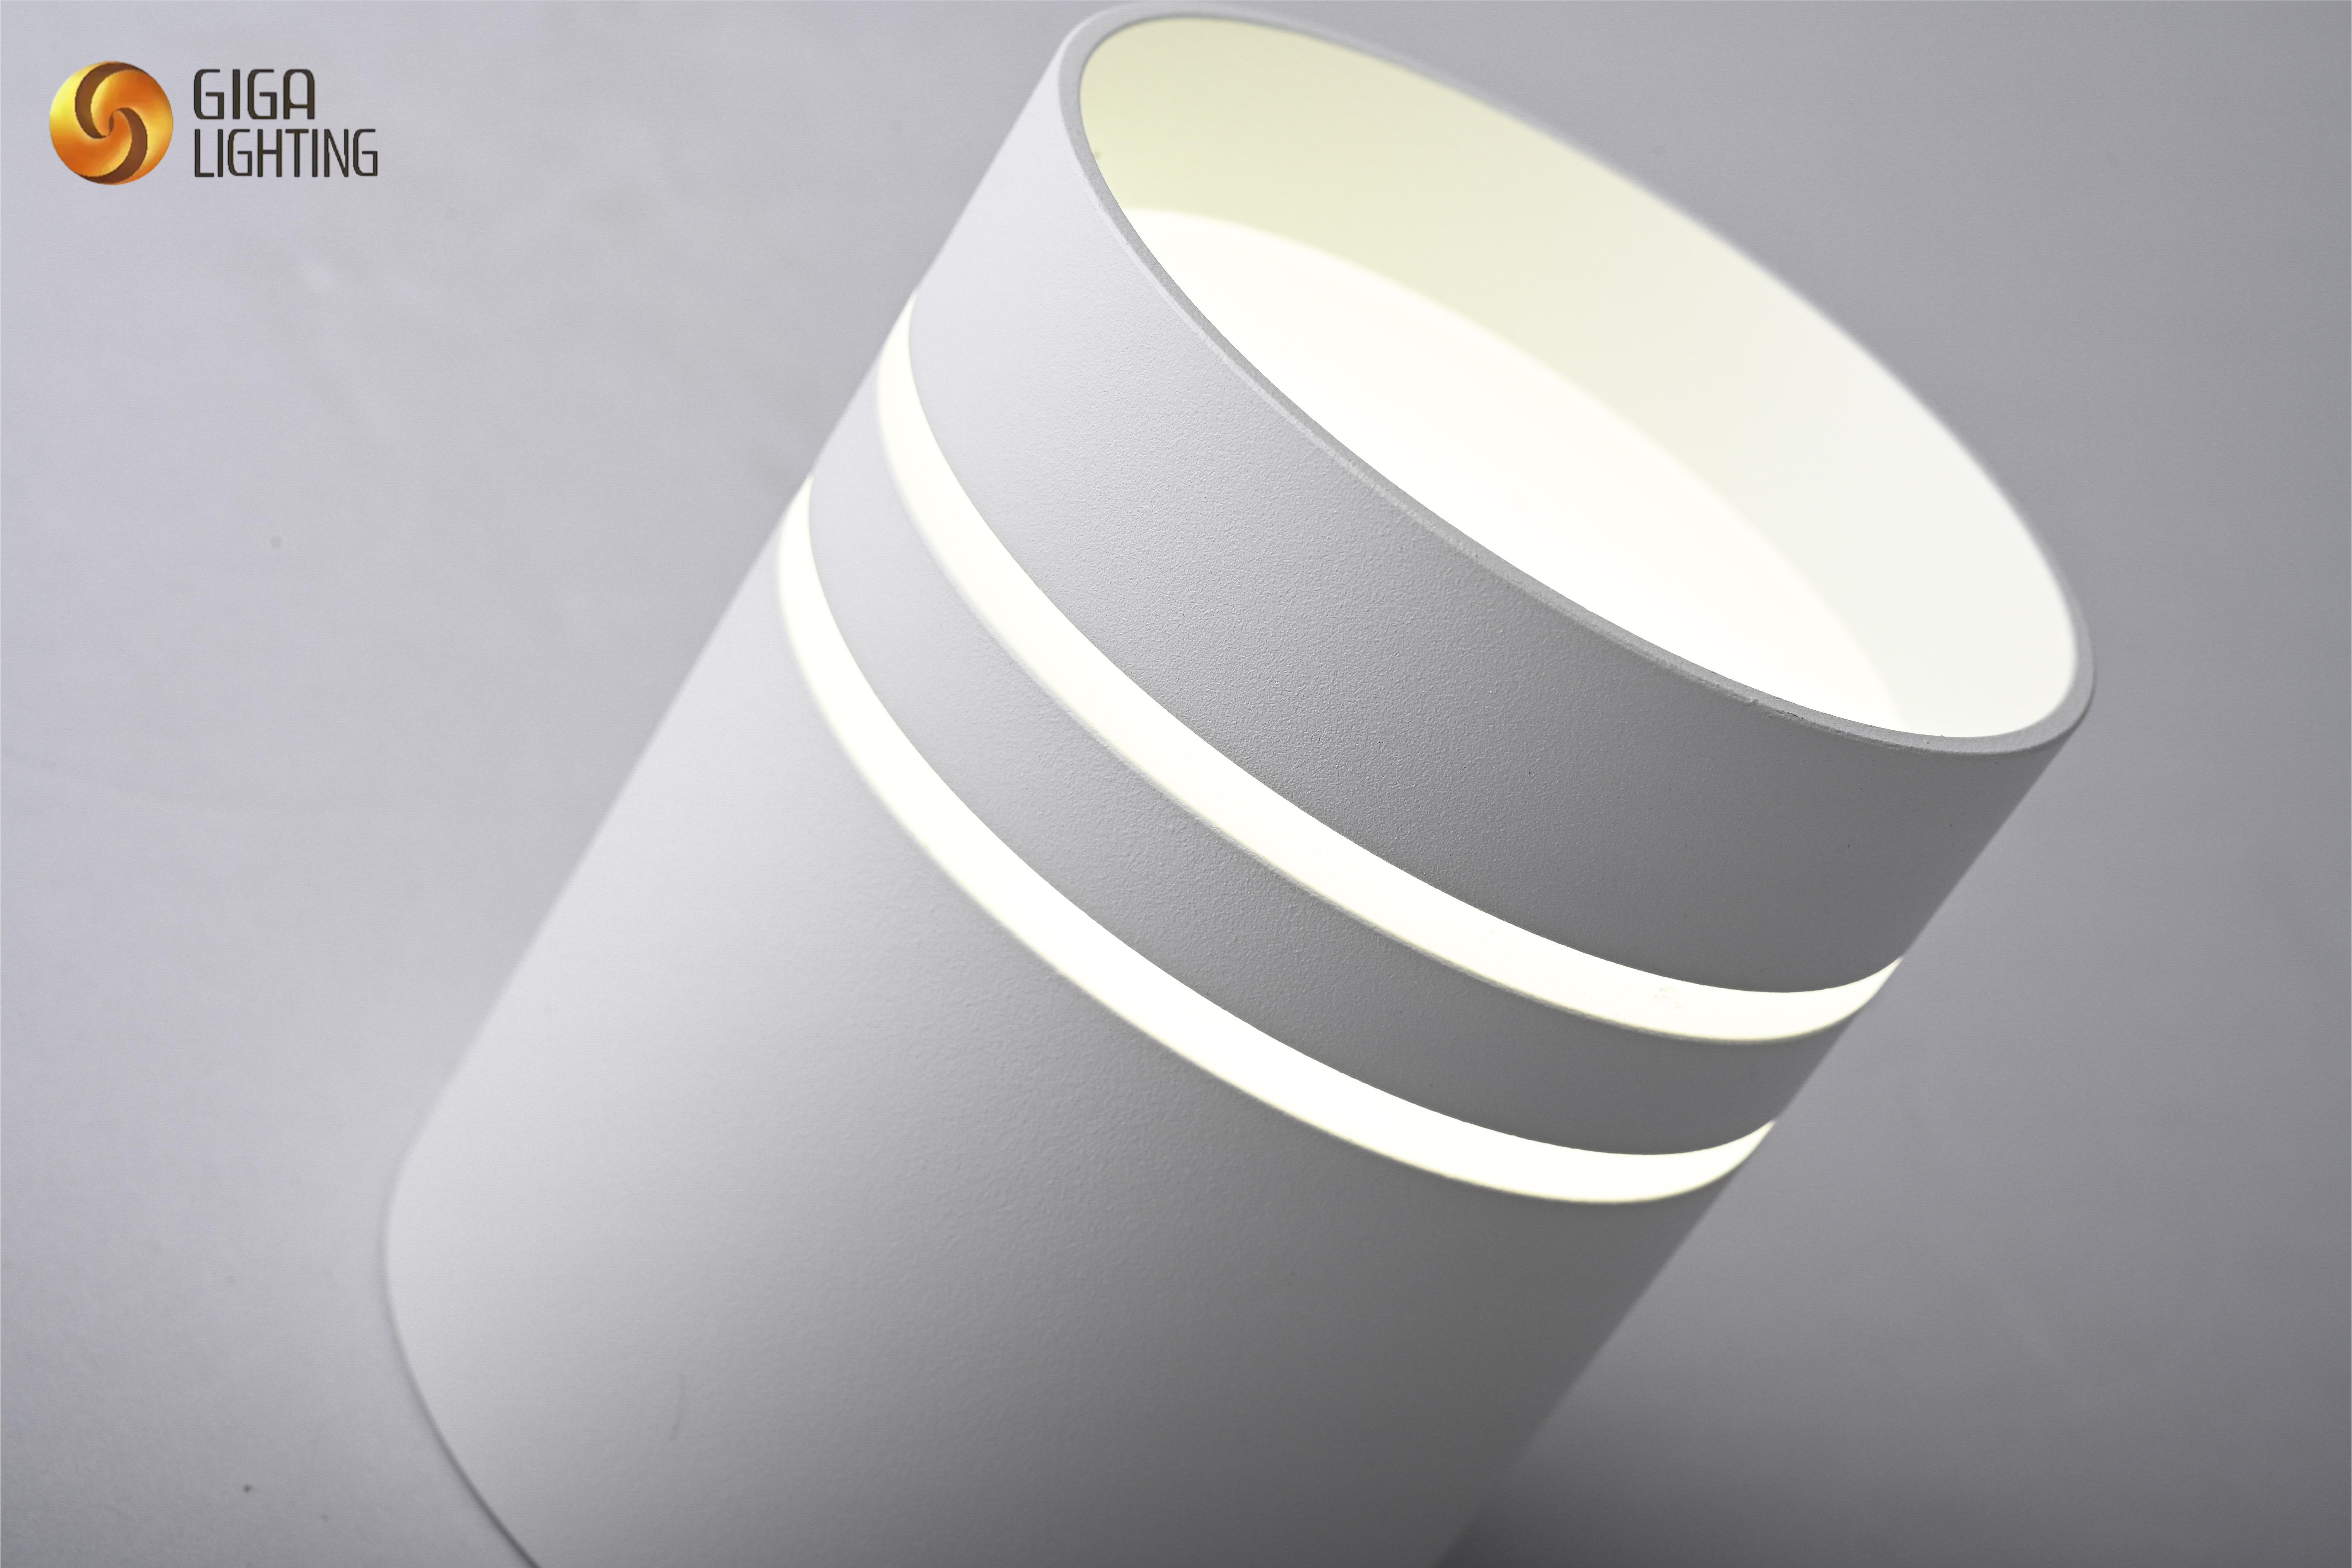 Magnetic LED spot light Smart home lighting solutions Precision Illumination: Magnetic LED Spotlights for Every Angle Versatile directional lights Adjustable